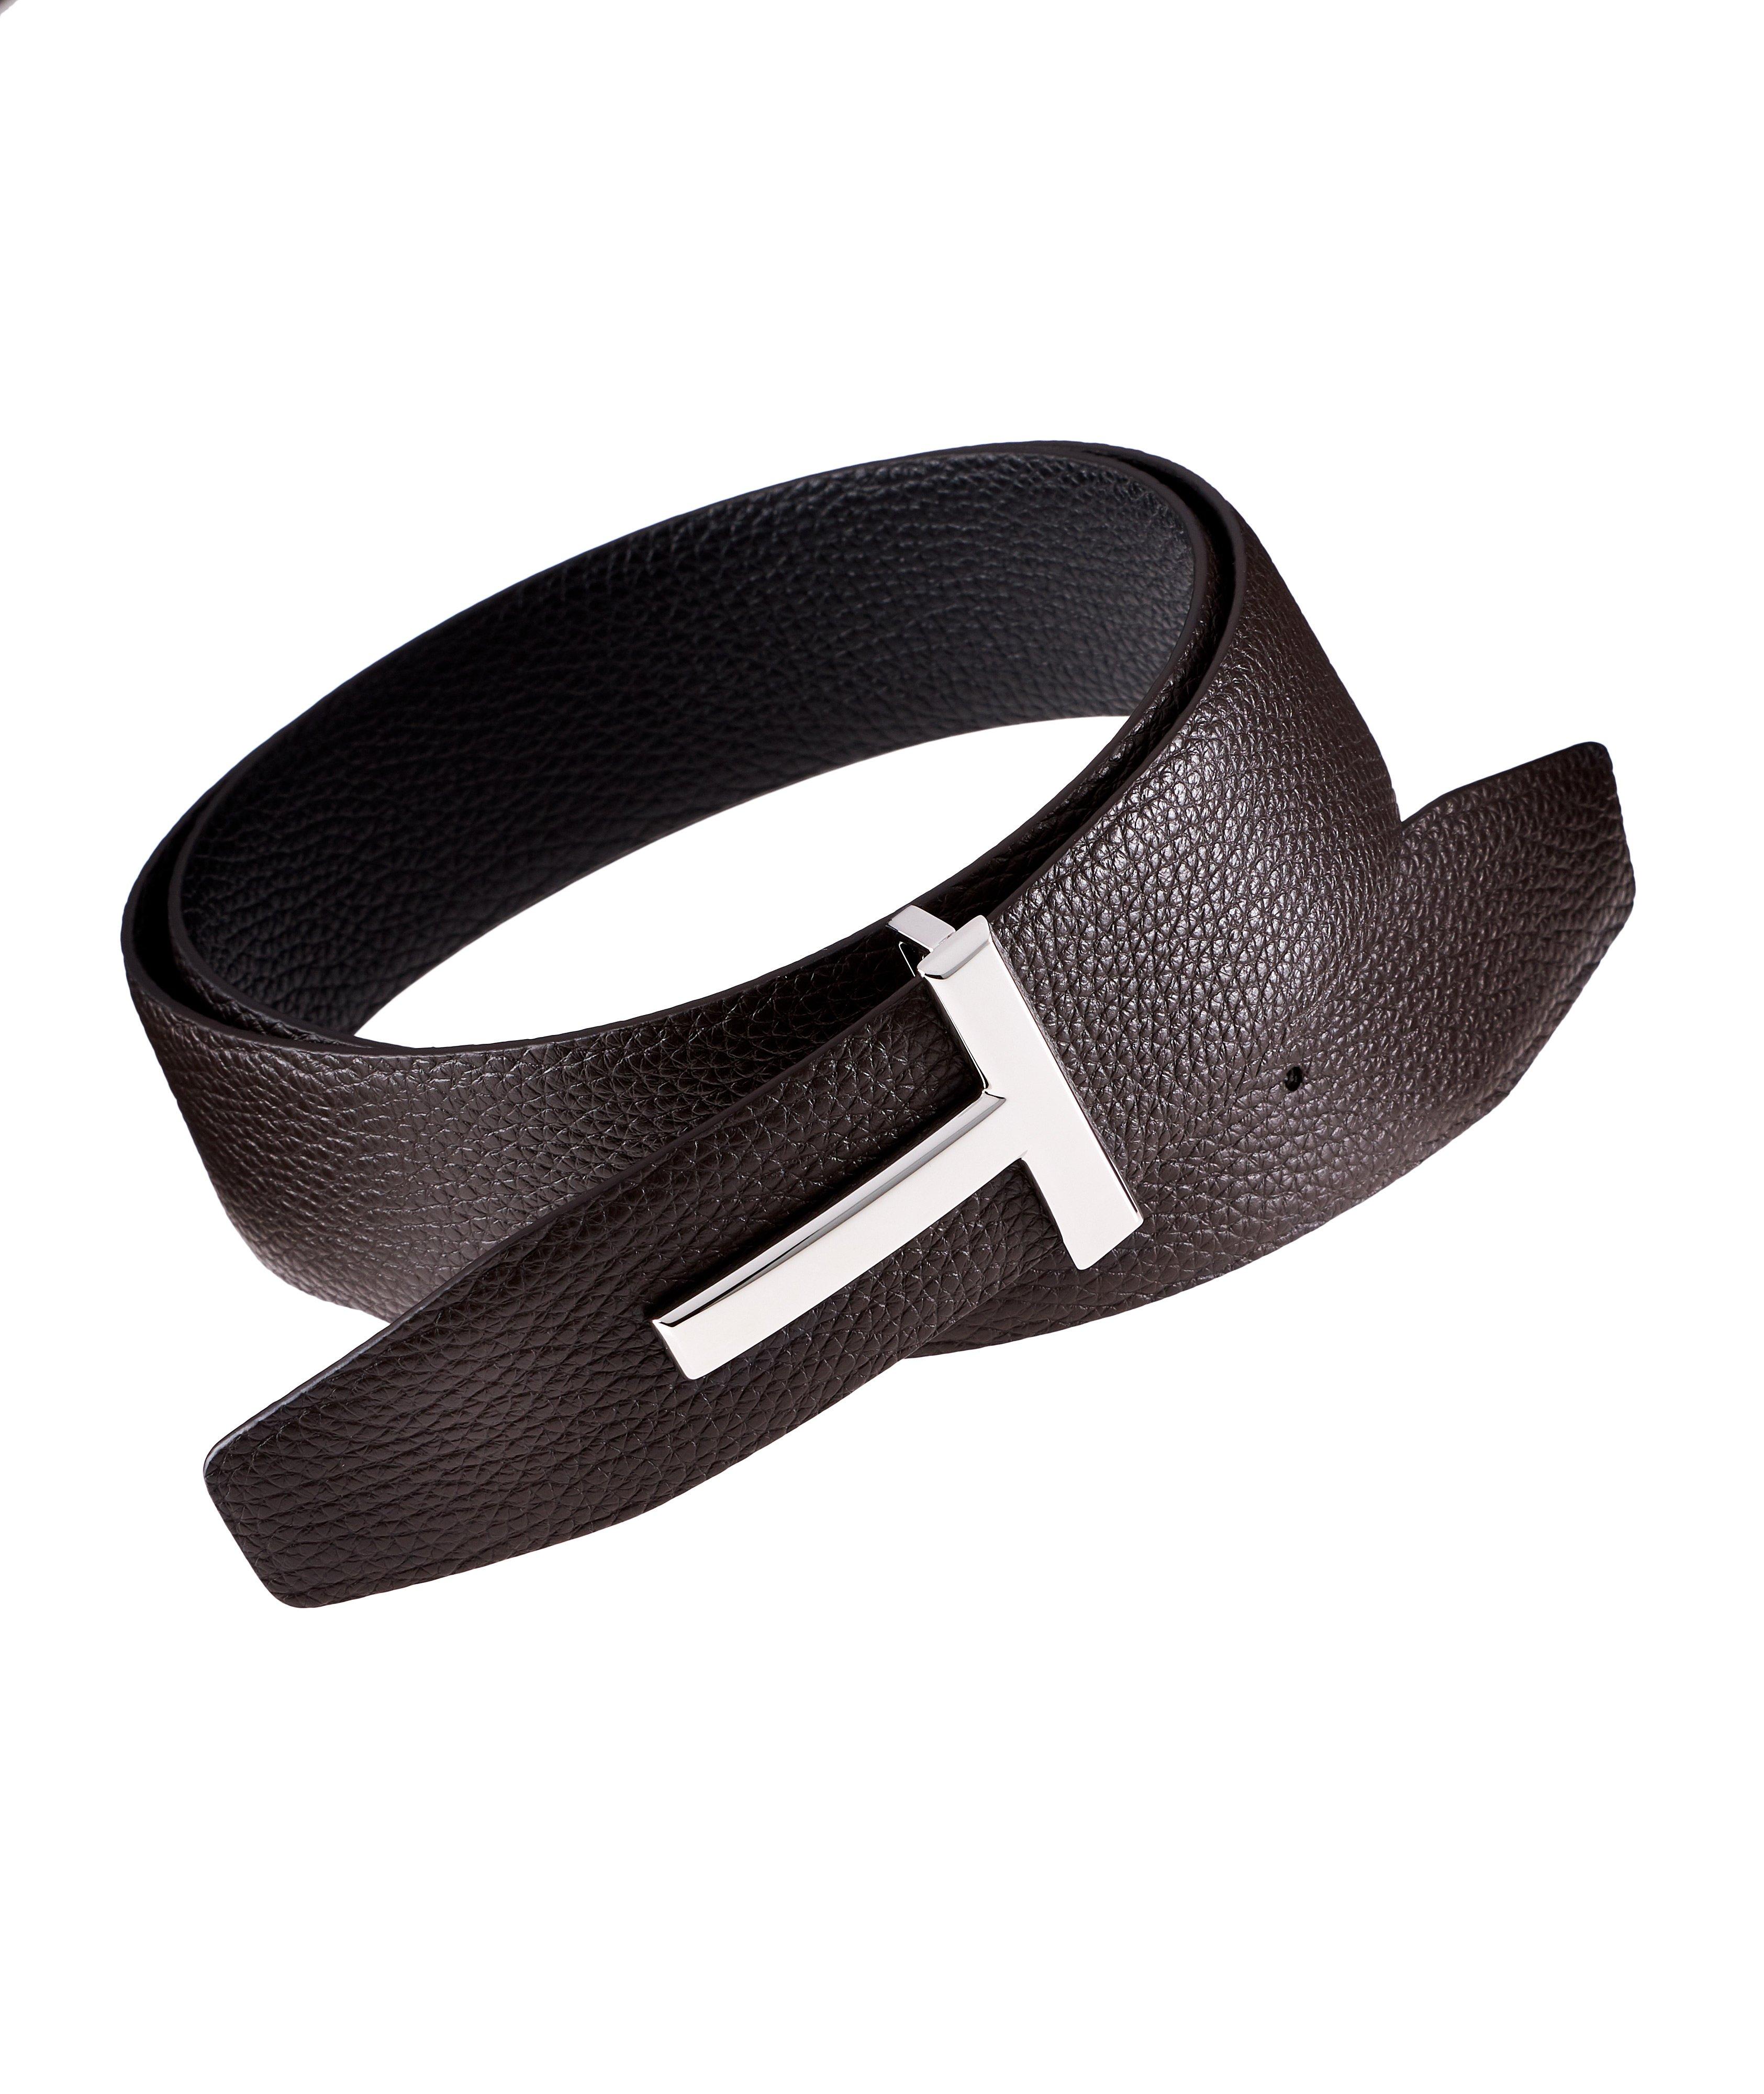 T Buckle Leather Belt image 0